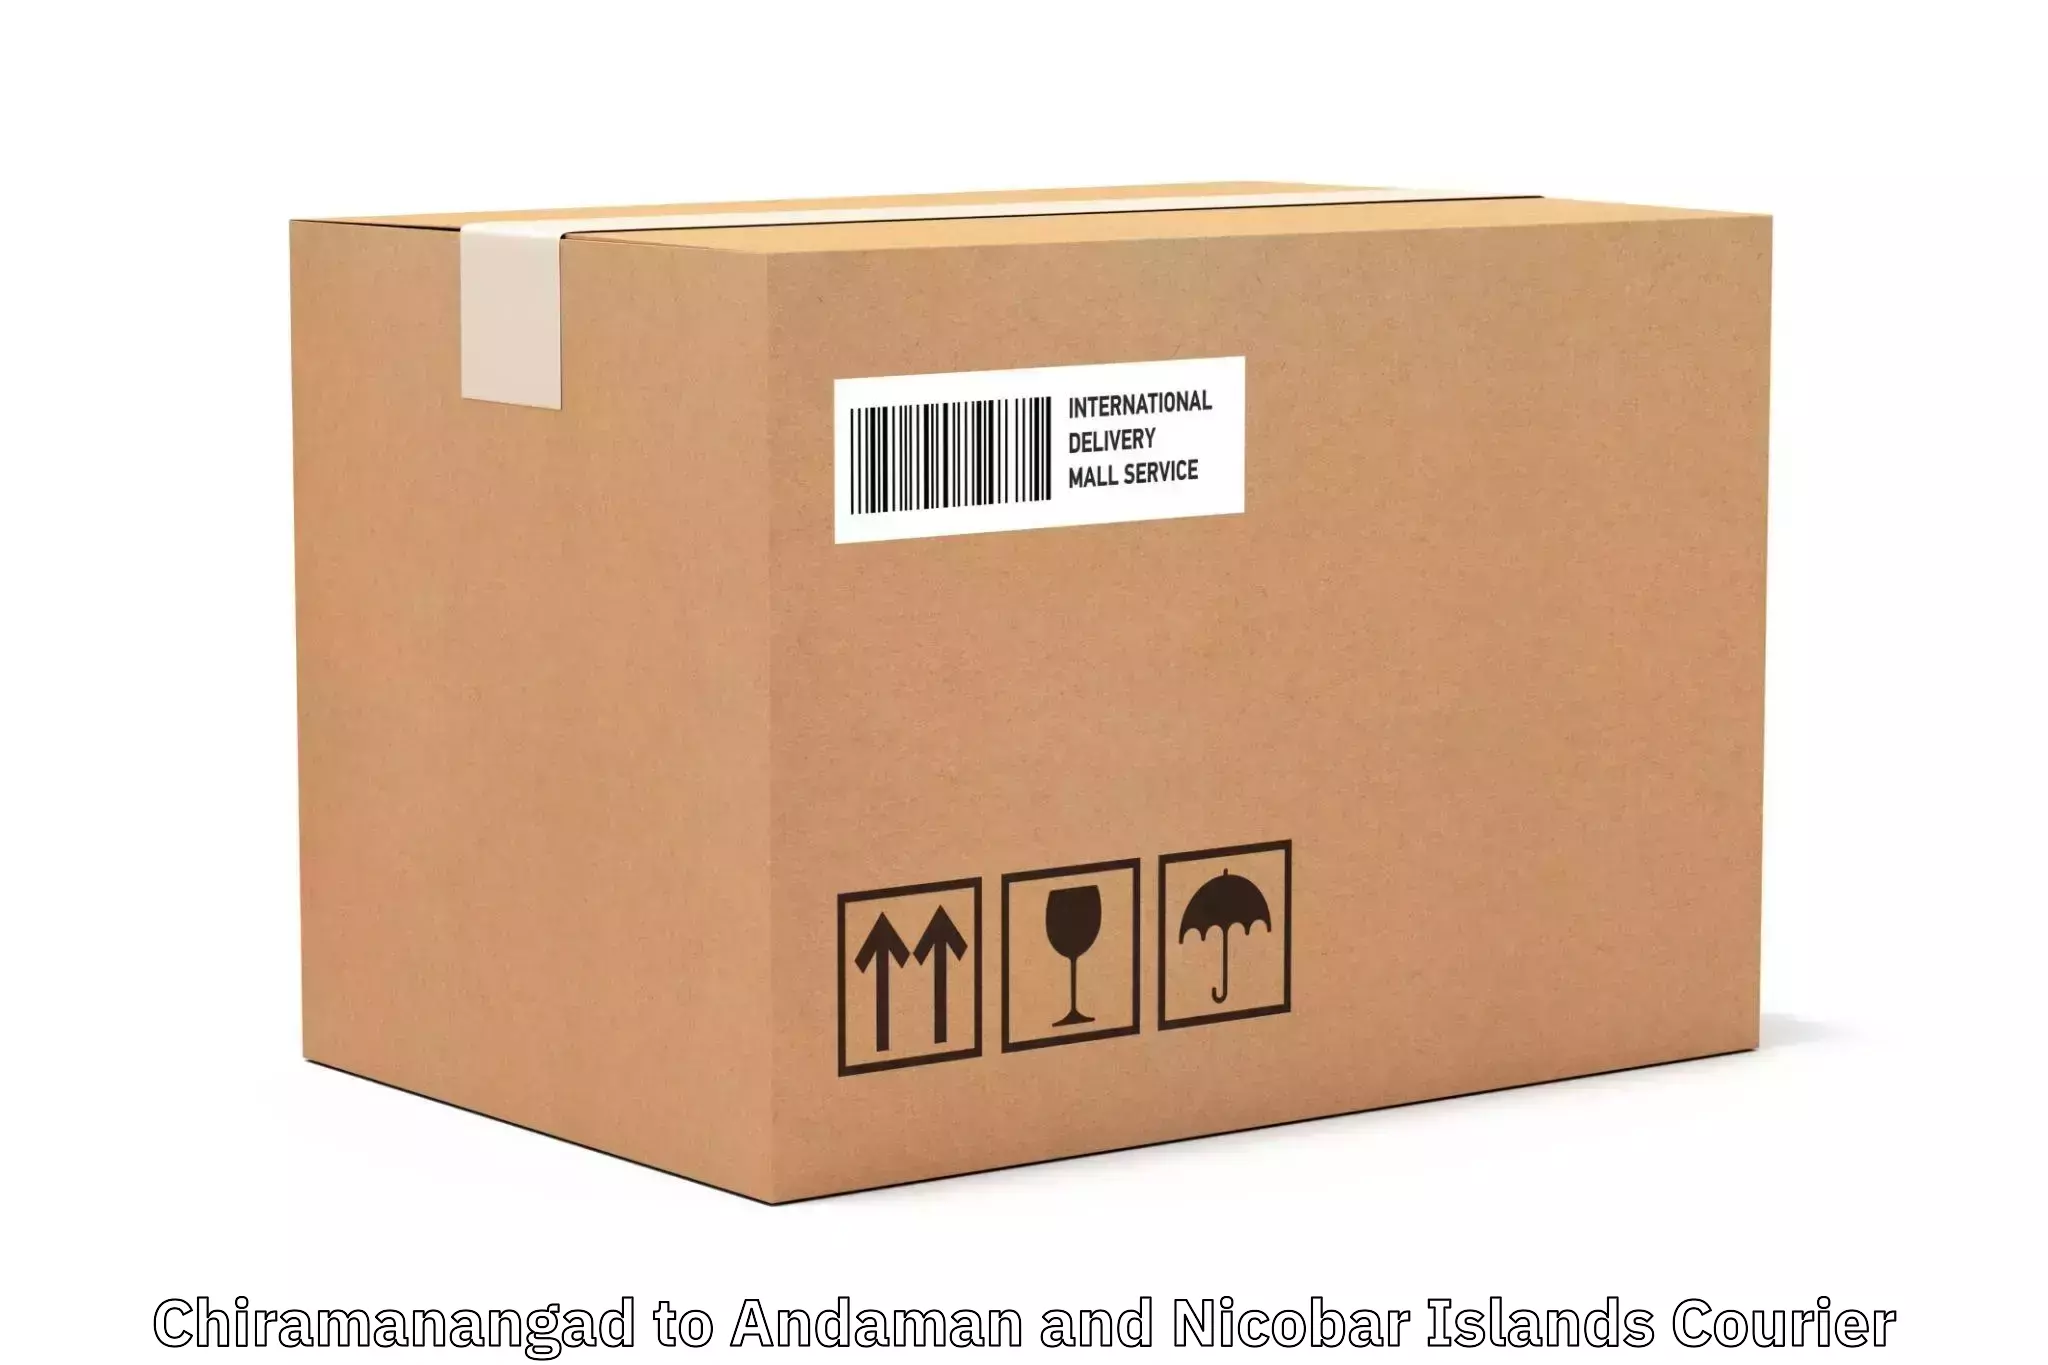 Custom courier packaging Chiramanangad to Port Blair